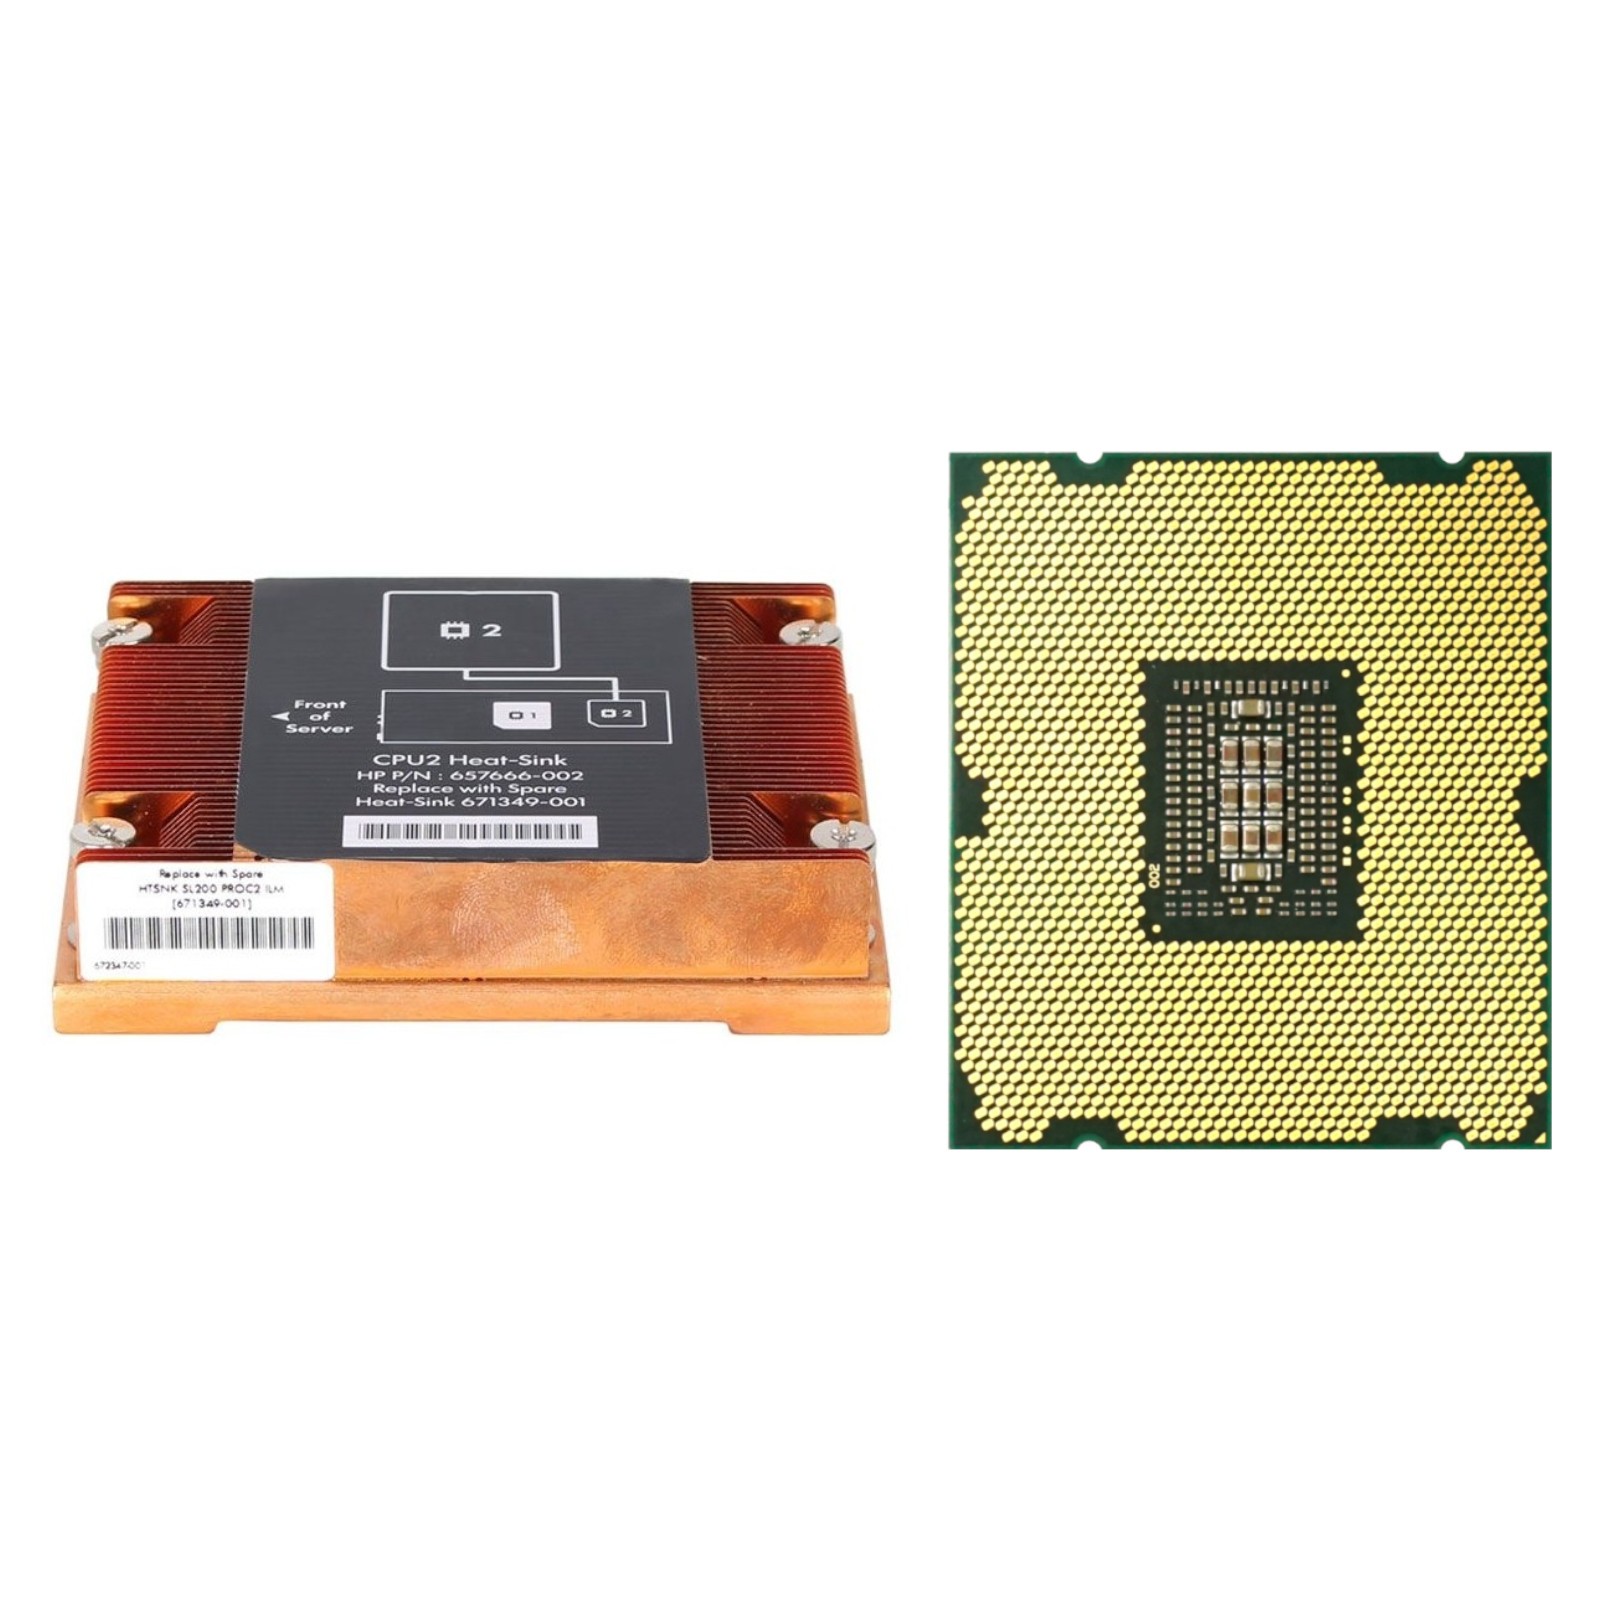 HP (662319-B21) ProLiant SL250S G8 - Intel Xeon E5-2670 CPU2 Kit